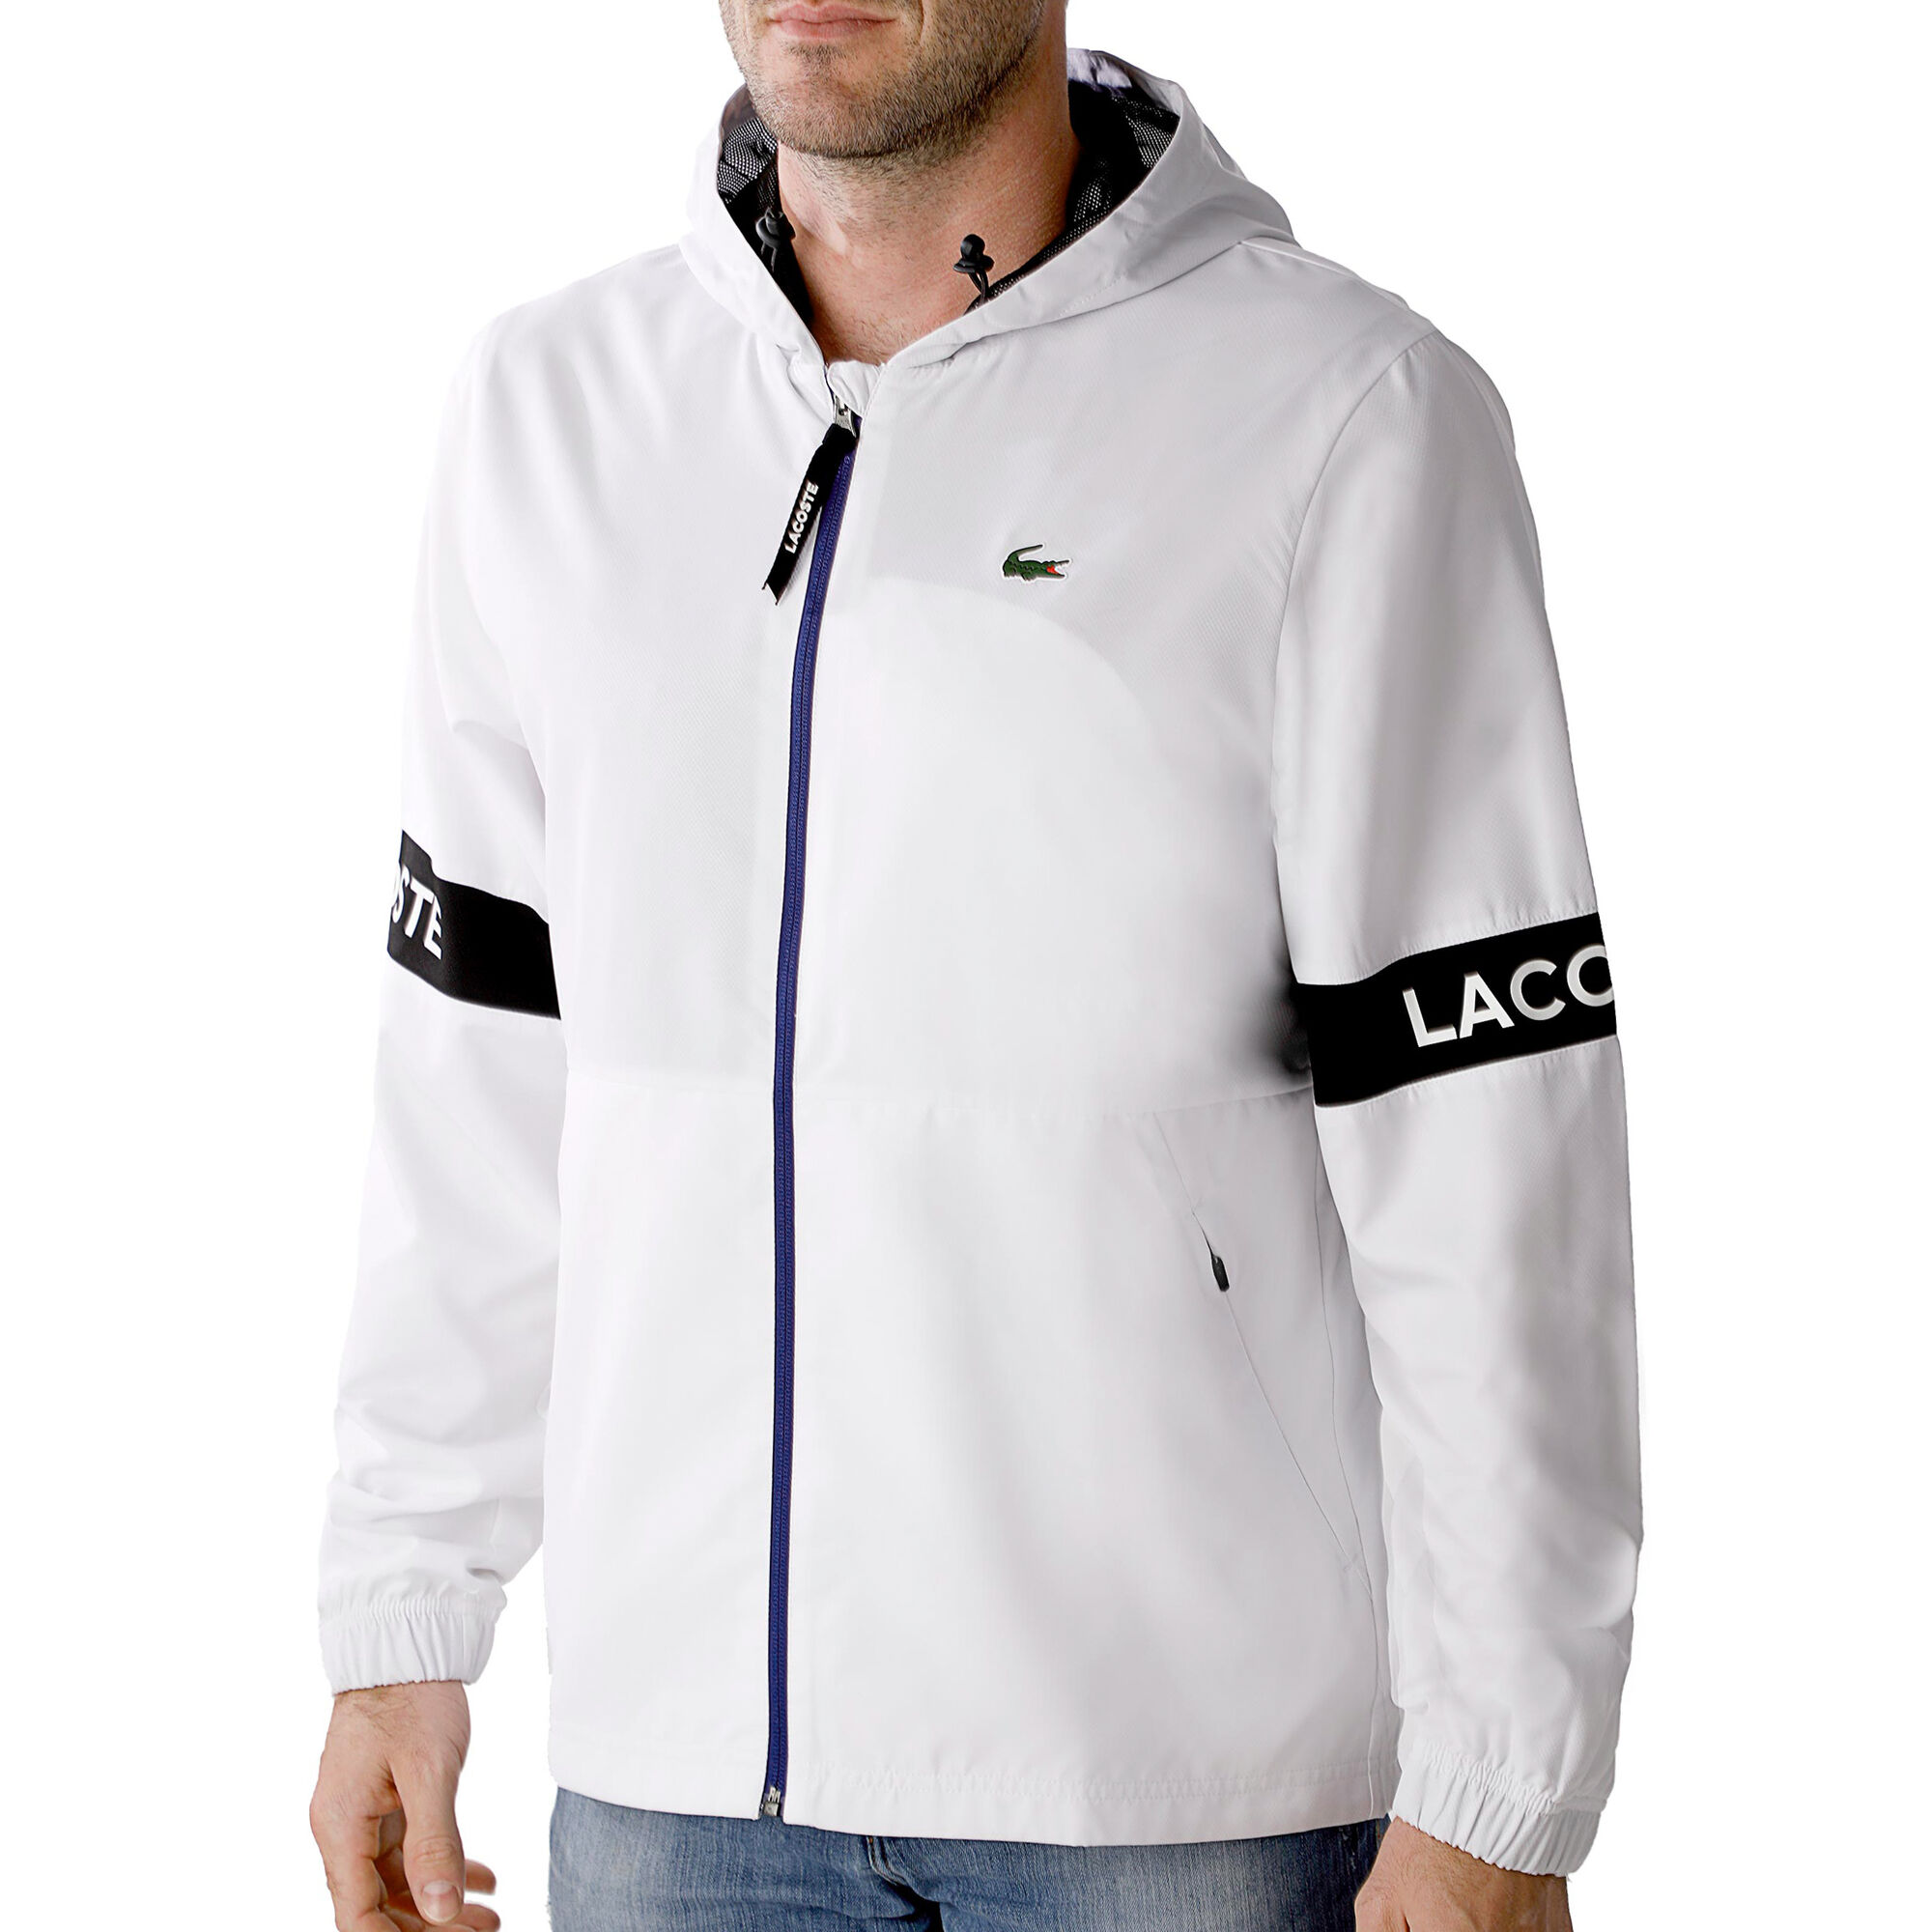 Lacoste Trainingsjacke Herren Weiß, Schwarz Point | kaufen DE Tennis online